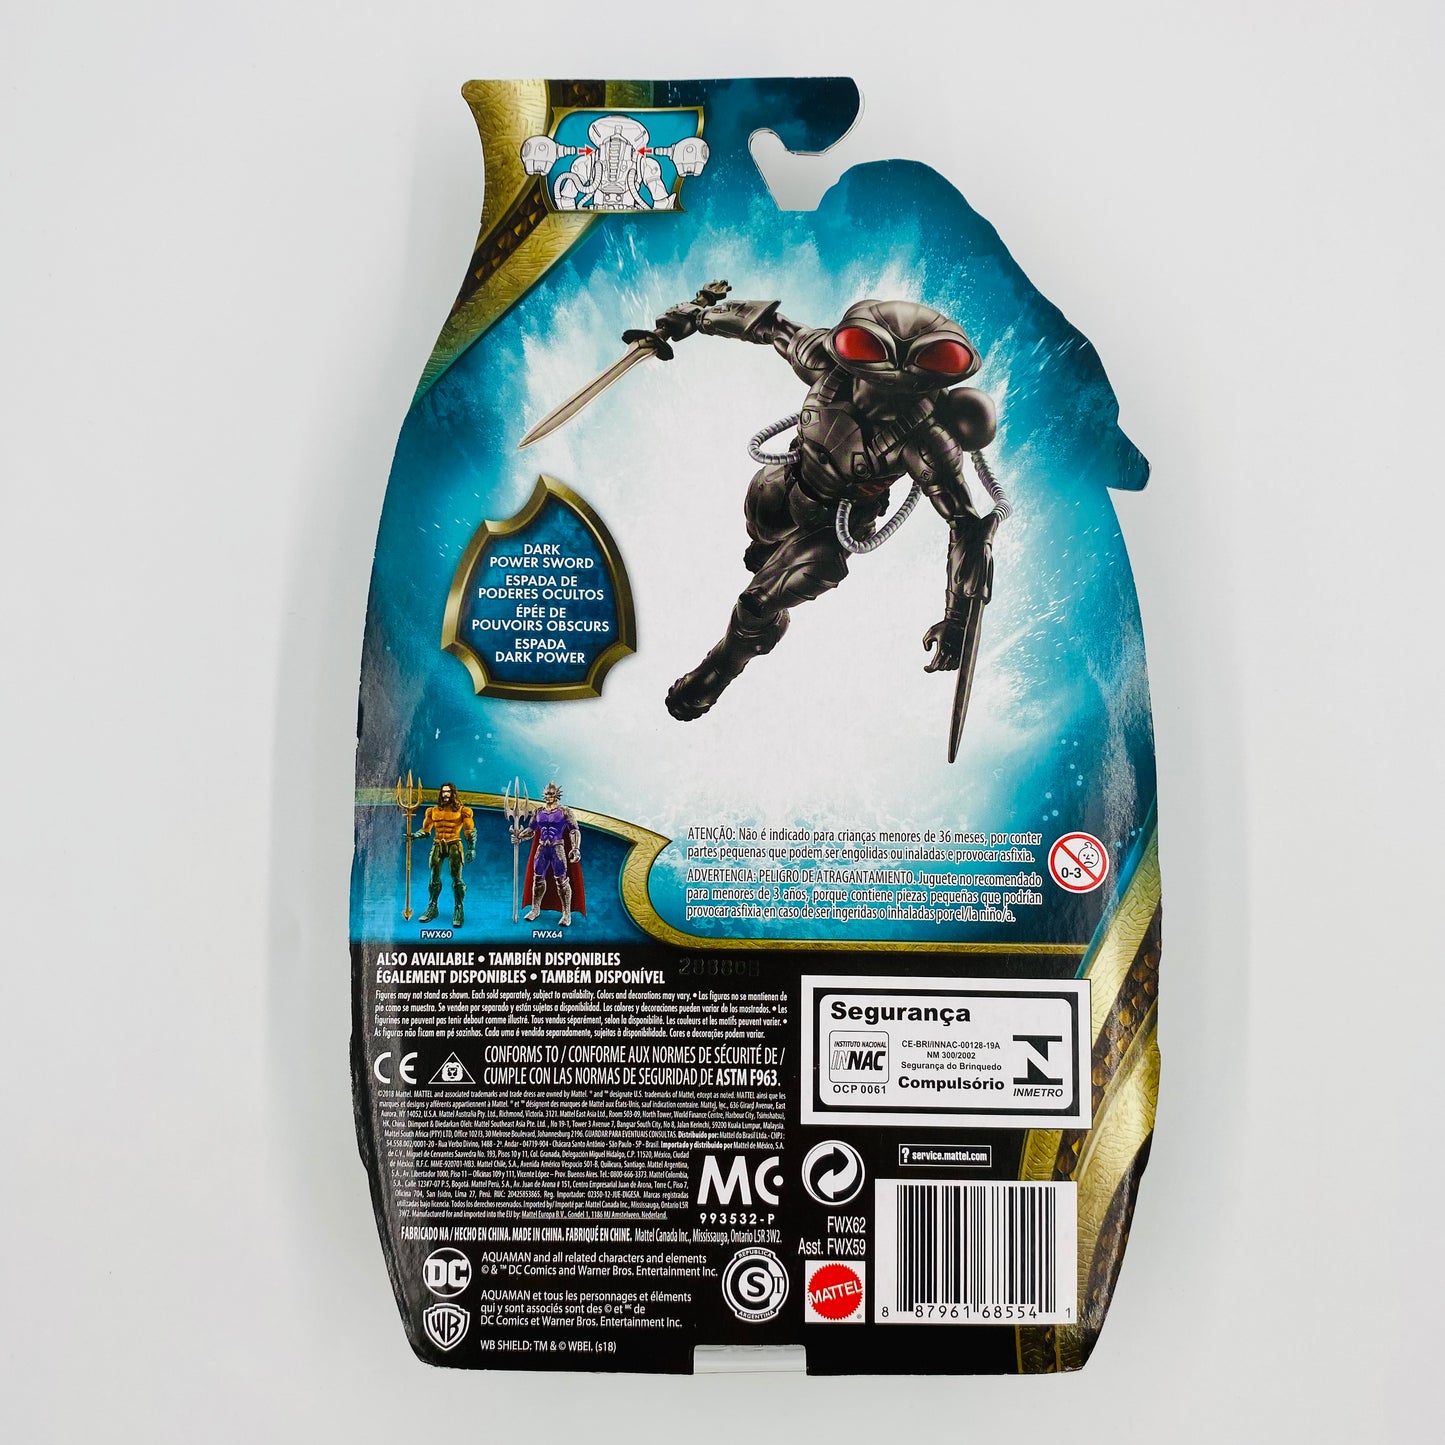 Aquaman set of 5 carded 6” action figures (2018) Mattel